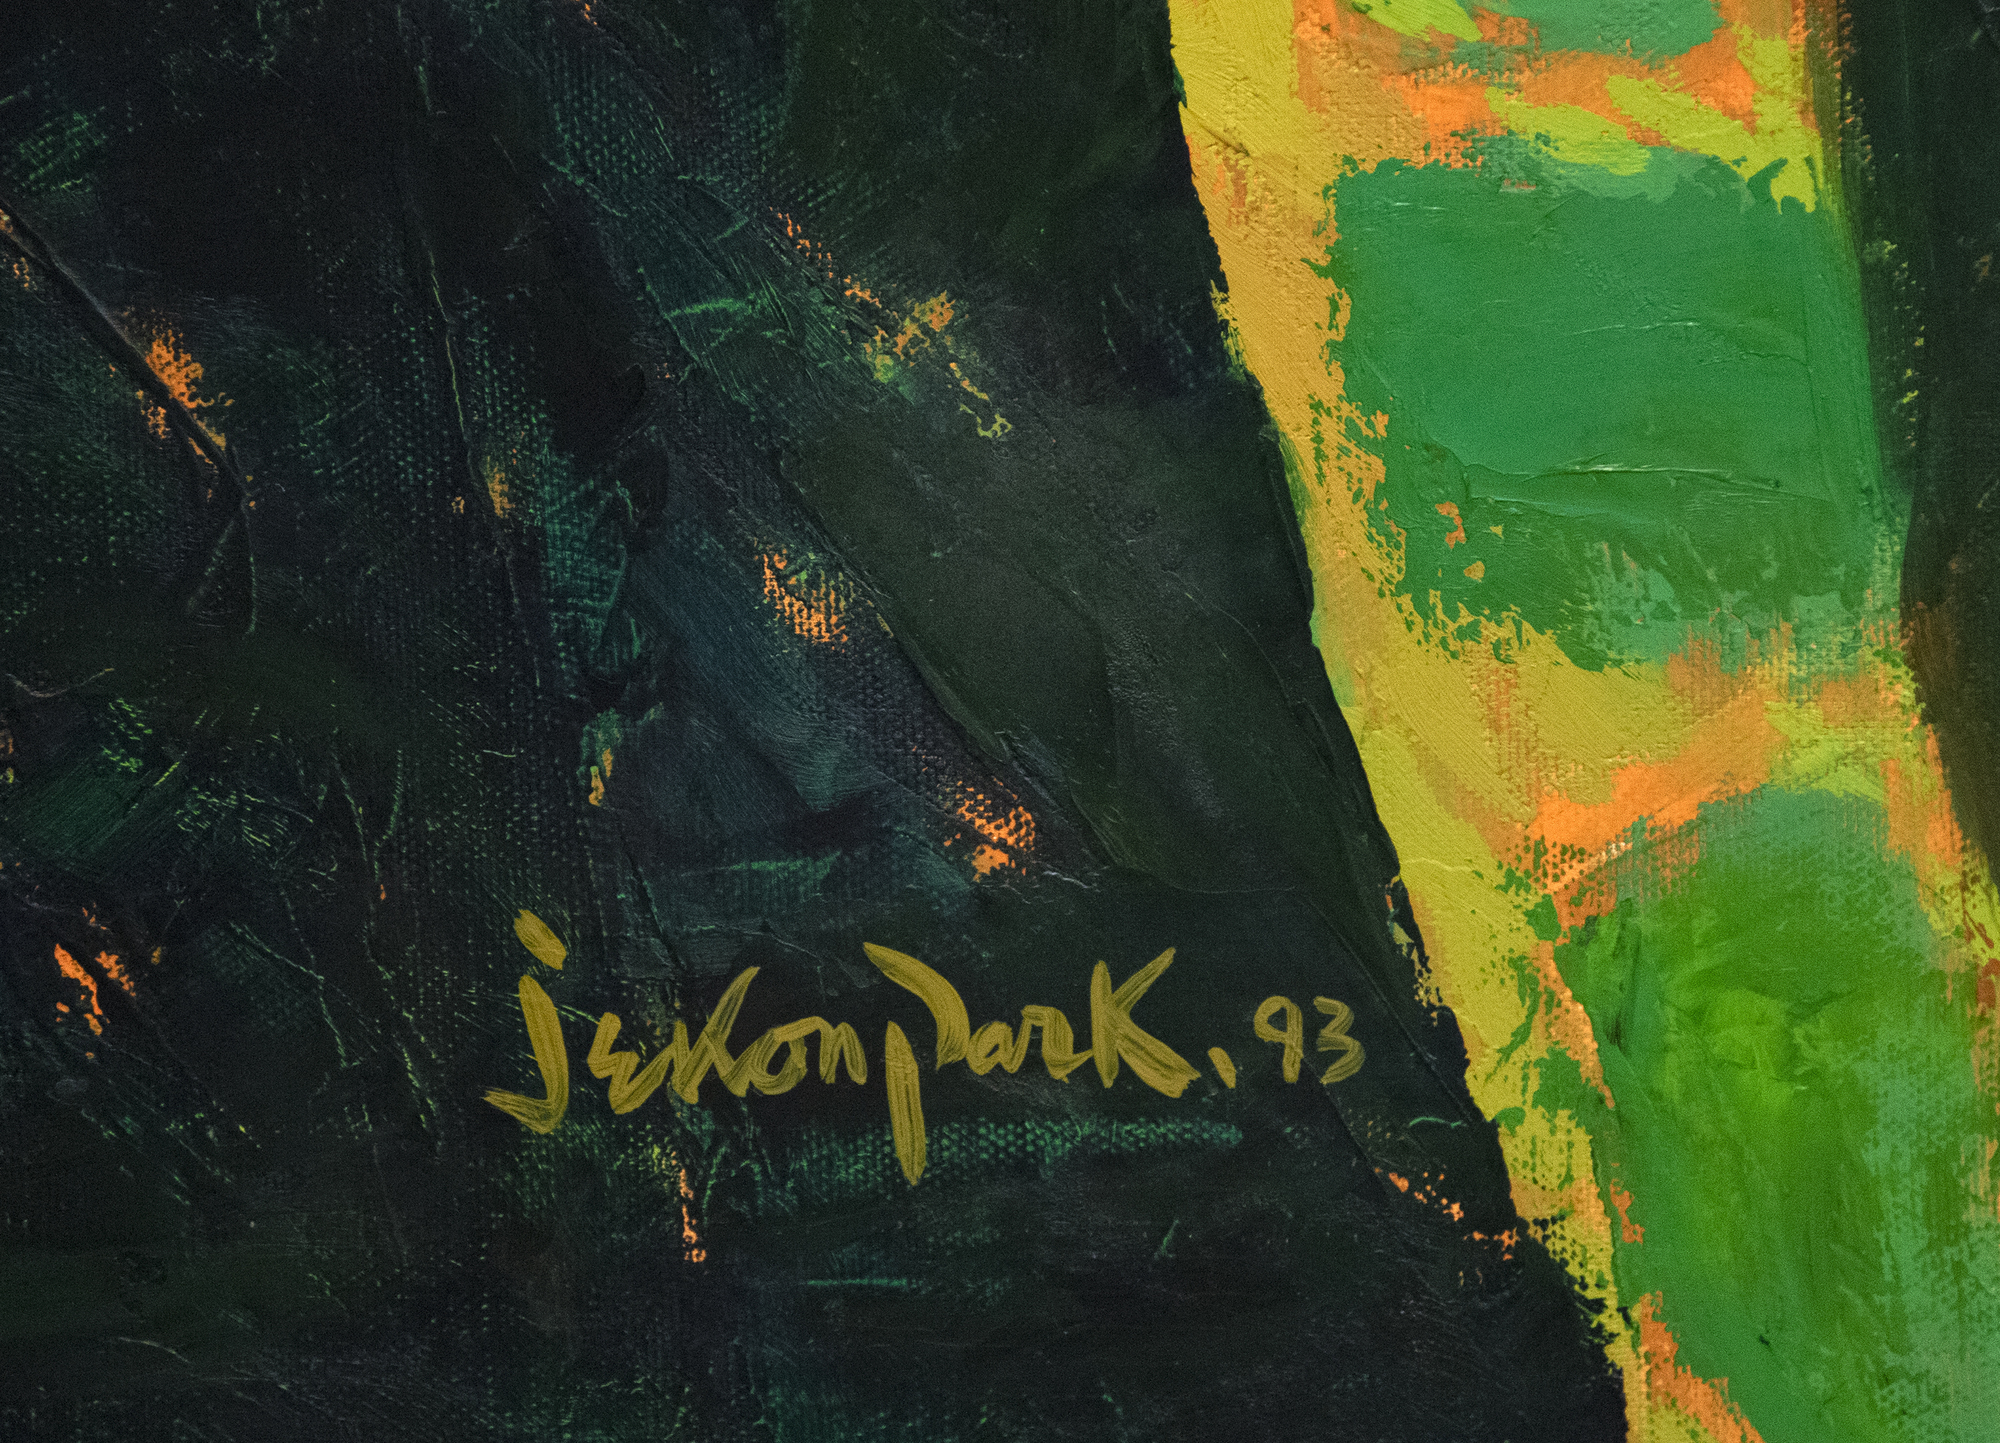 JAE KON PARK - Untitled - oil on canvas - 44 1/4 x 64 in.